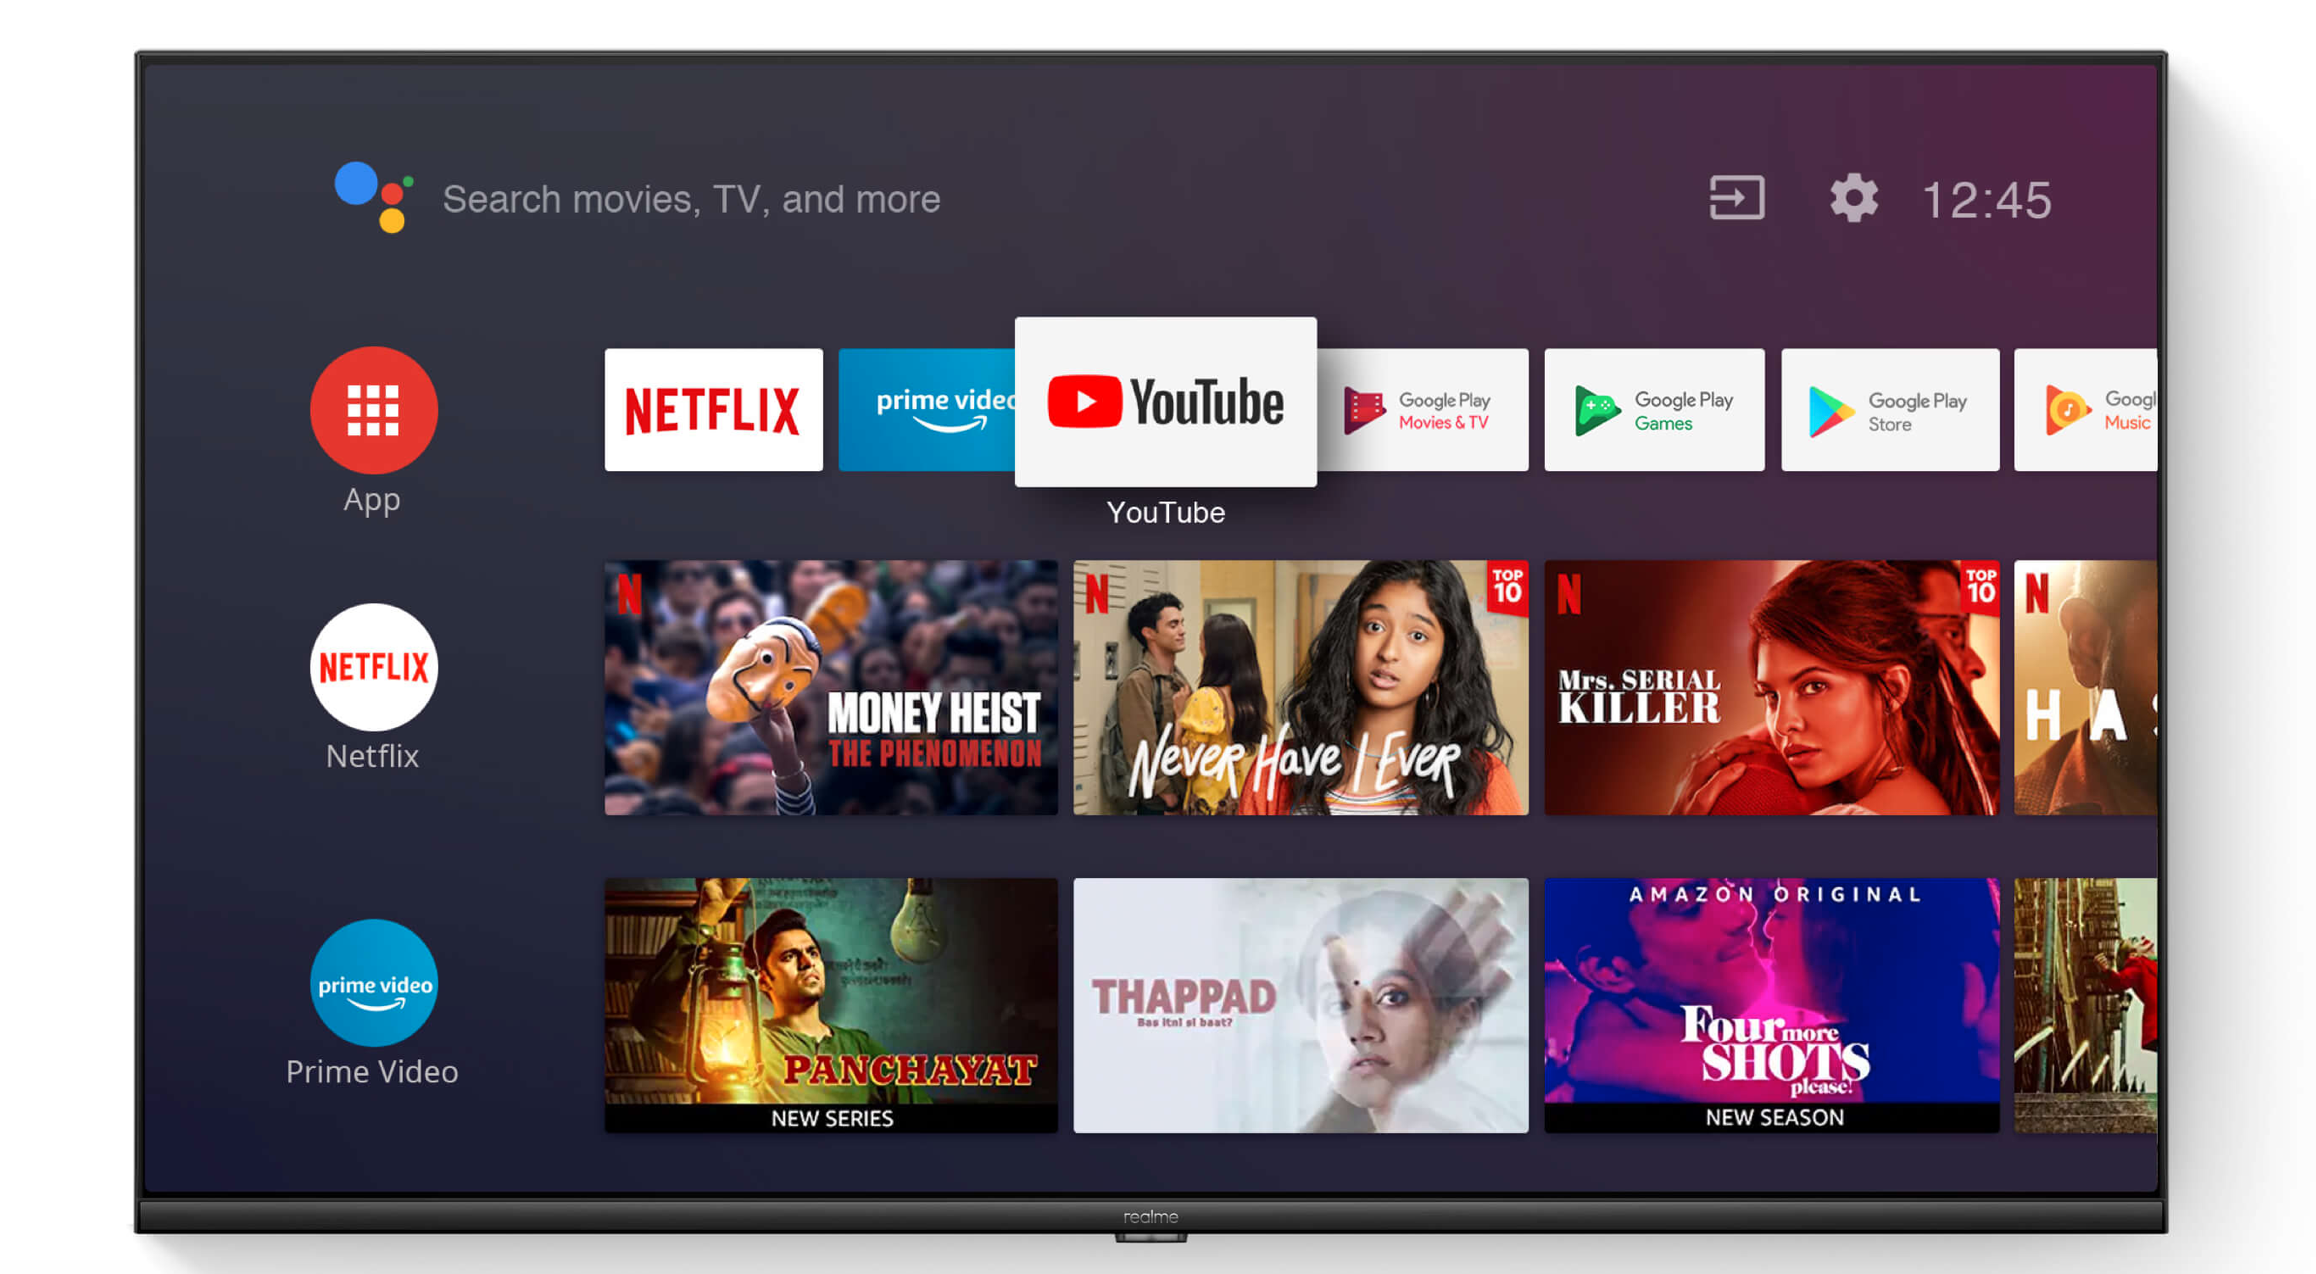 Google play на приставку. Google Smart TV. Netflix Prime Video youtube.